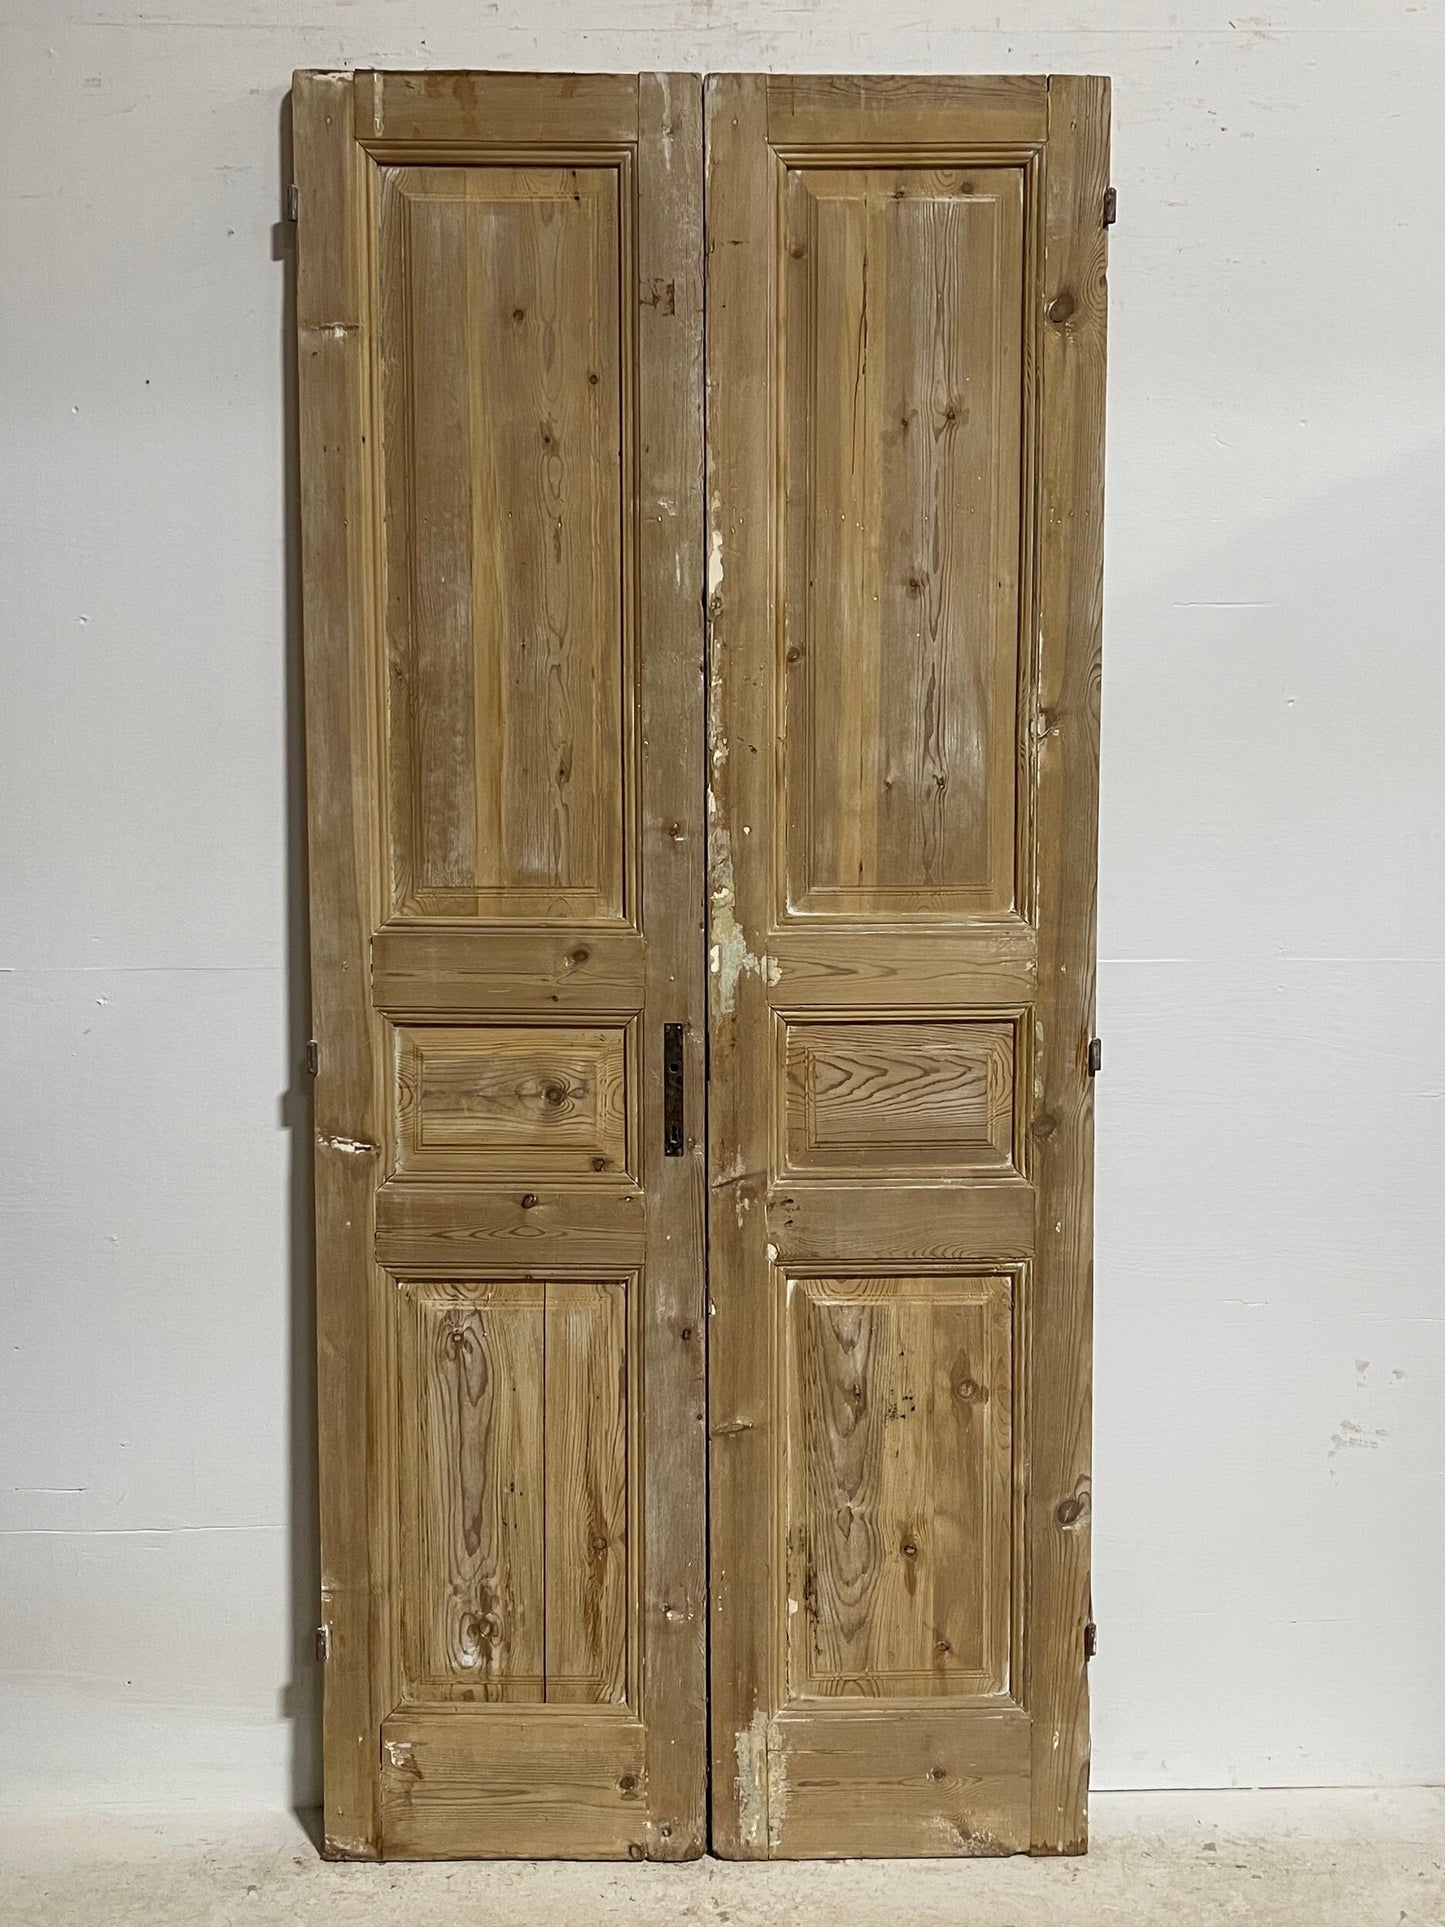 Antique French doors (93.5x41) H0091s